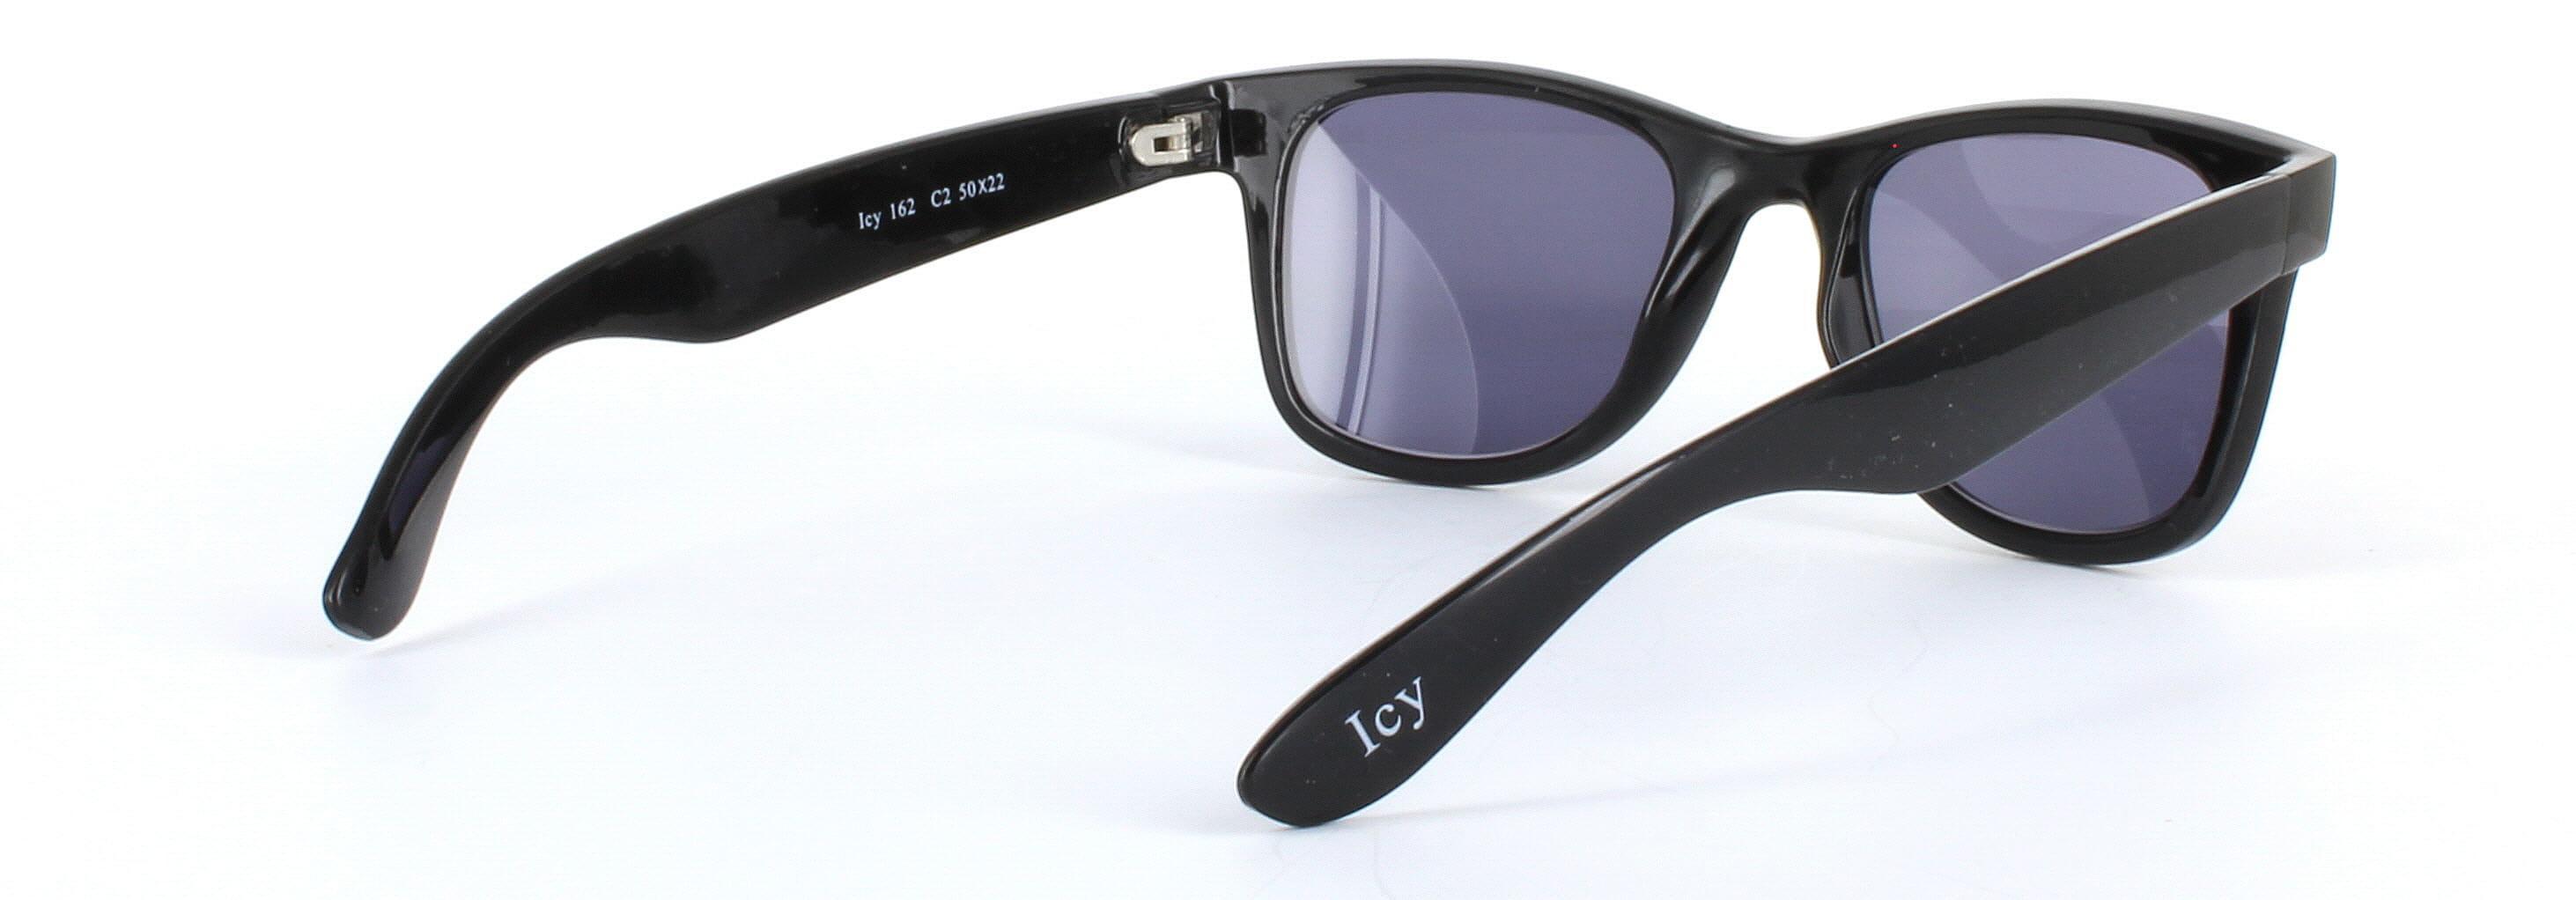 England Black Full Rim Plastic Sunglasses - Image View 4